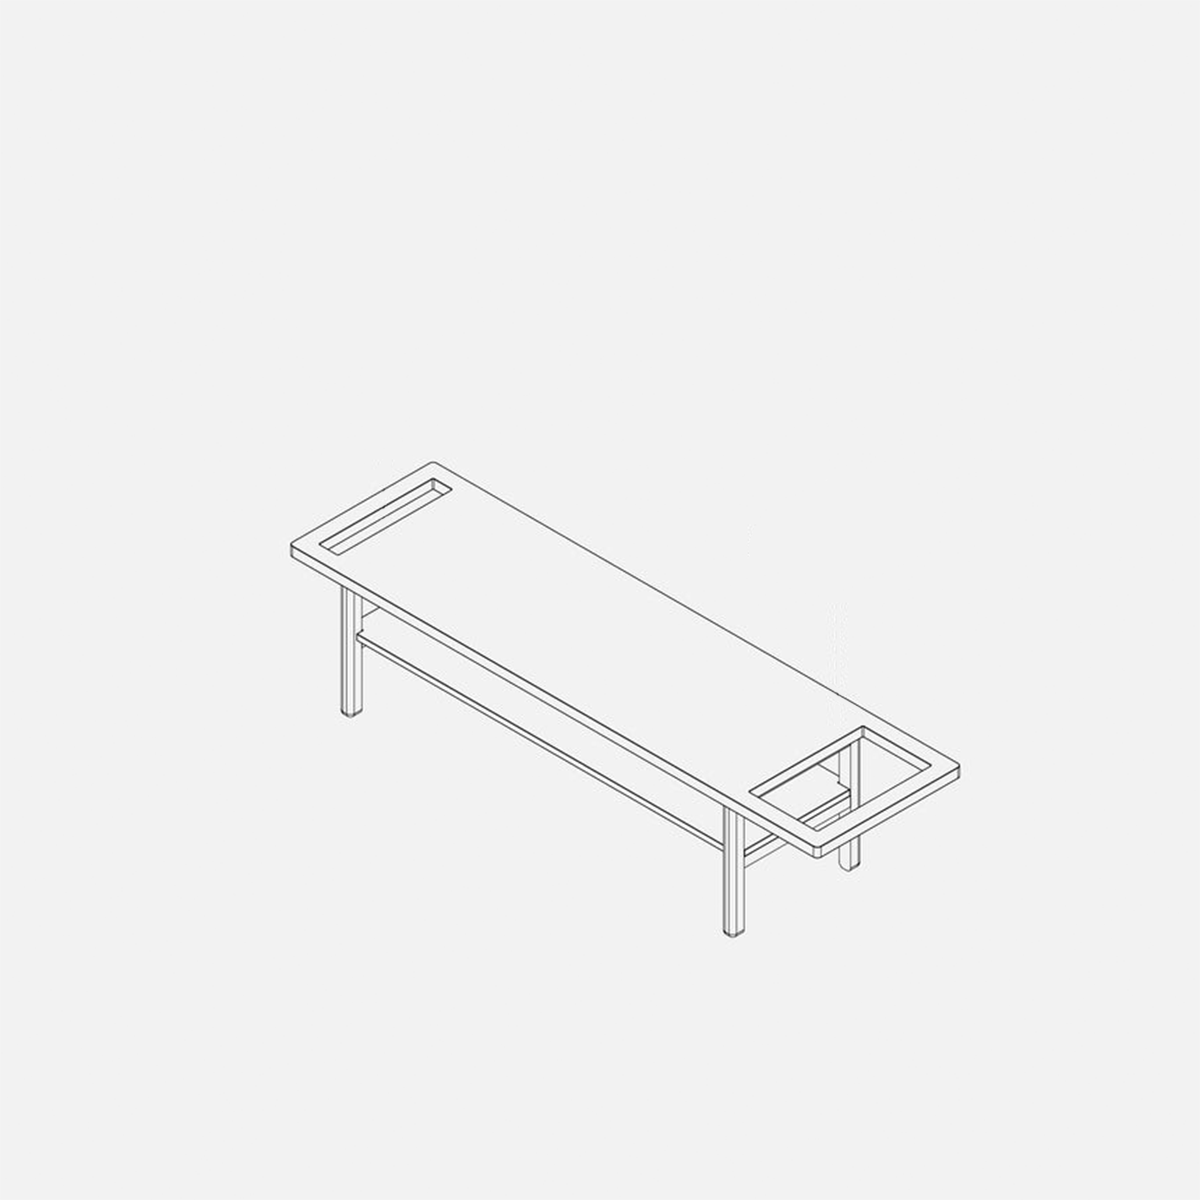 Modern bench with storage illustration